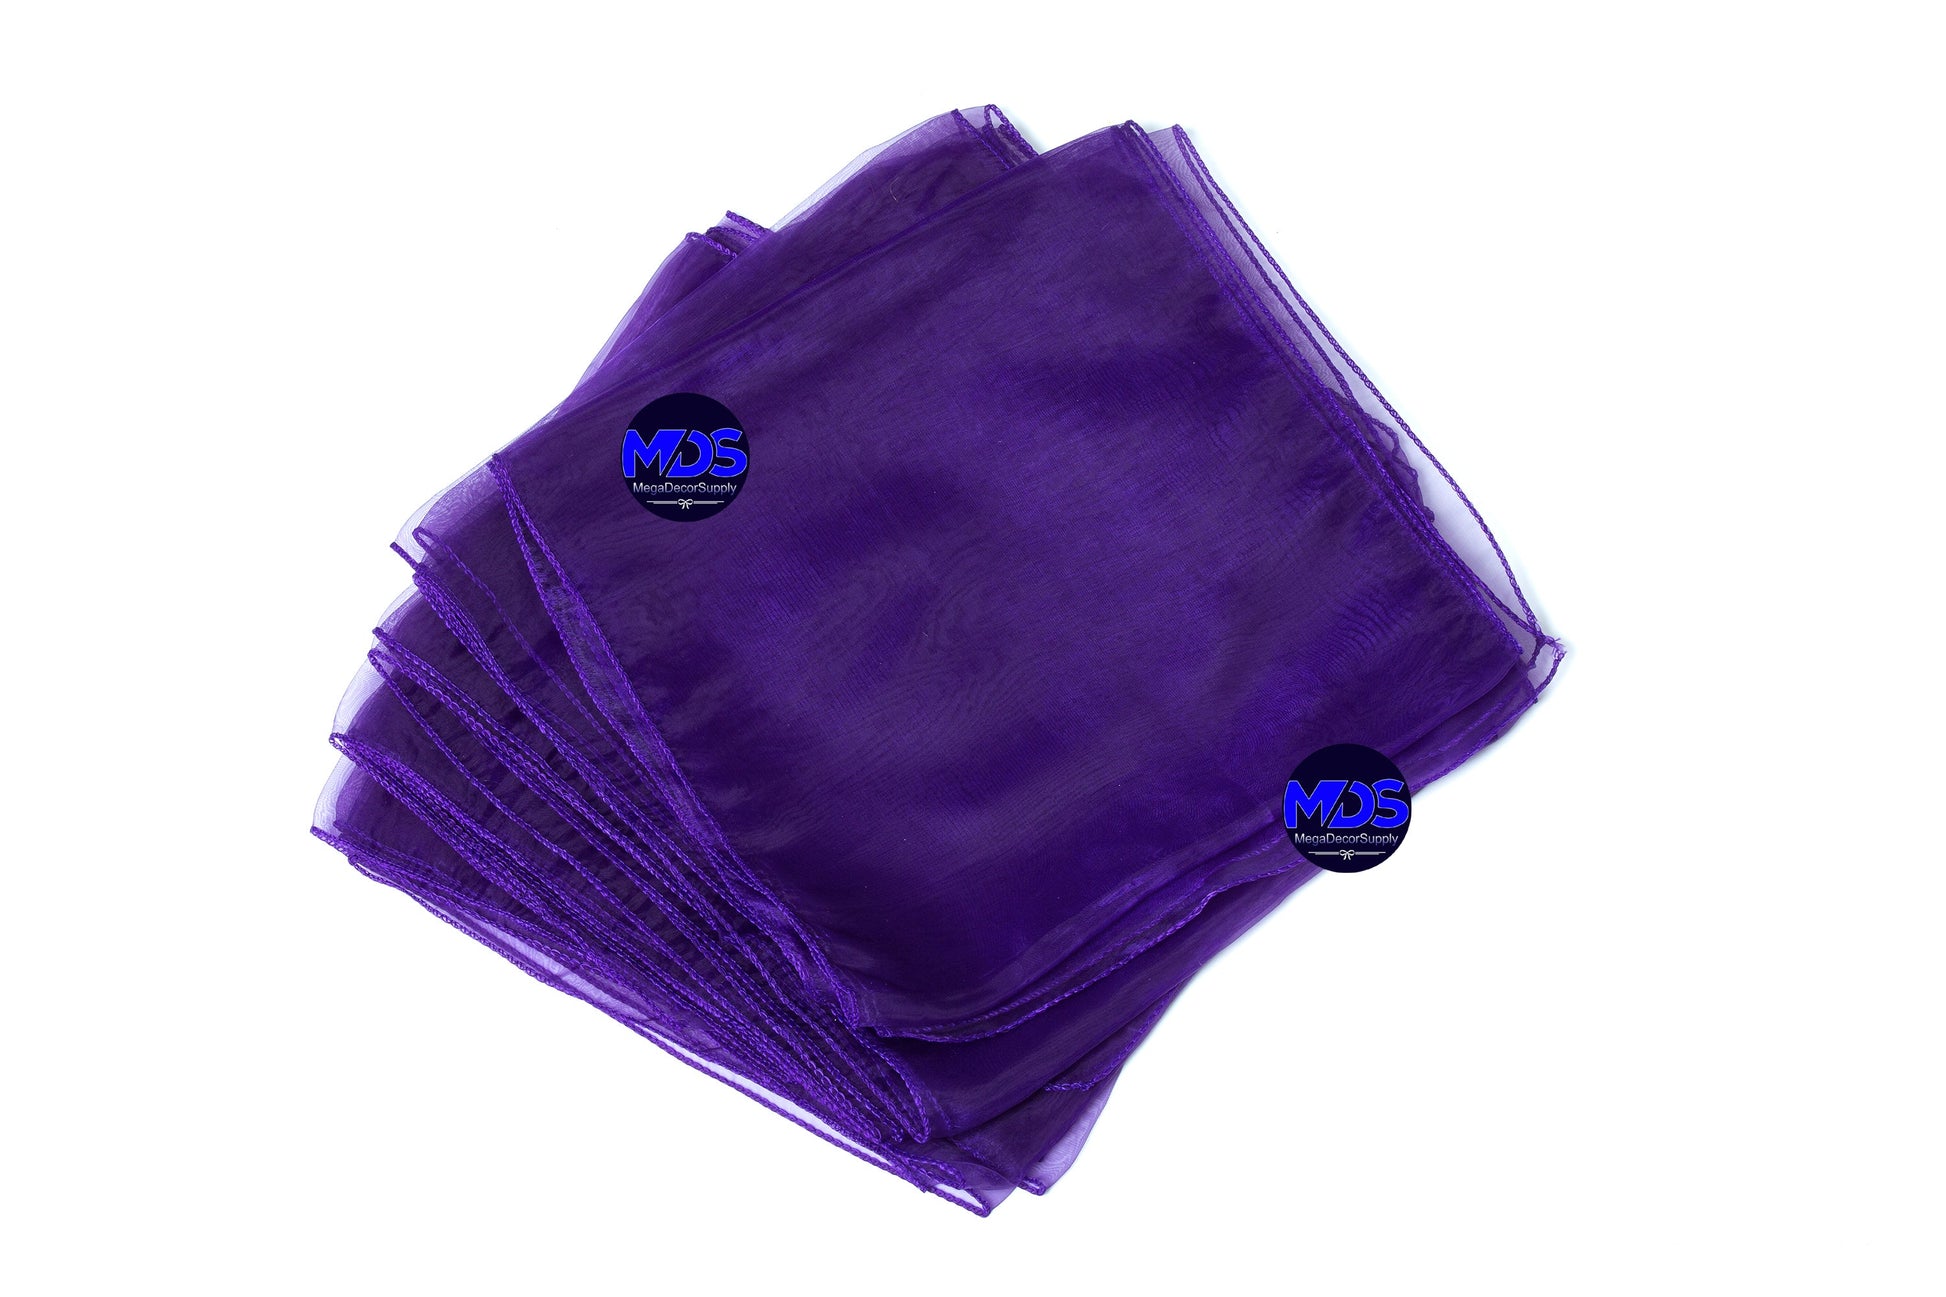 Cadbury Purple,2a2754af-d80b-4b14-858a-b3d3ce849ecd